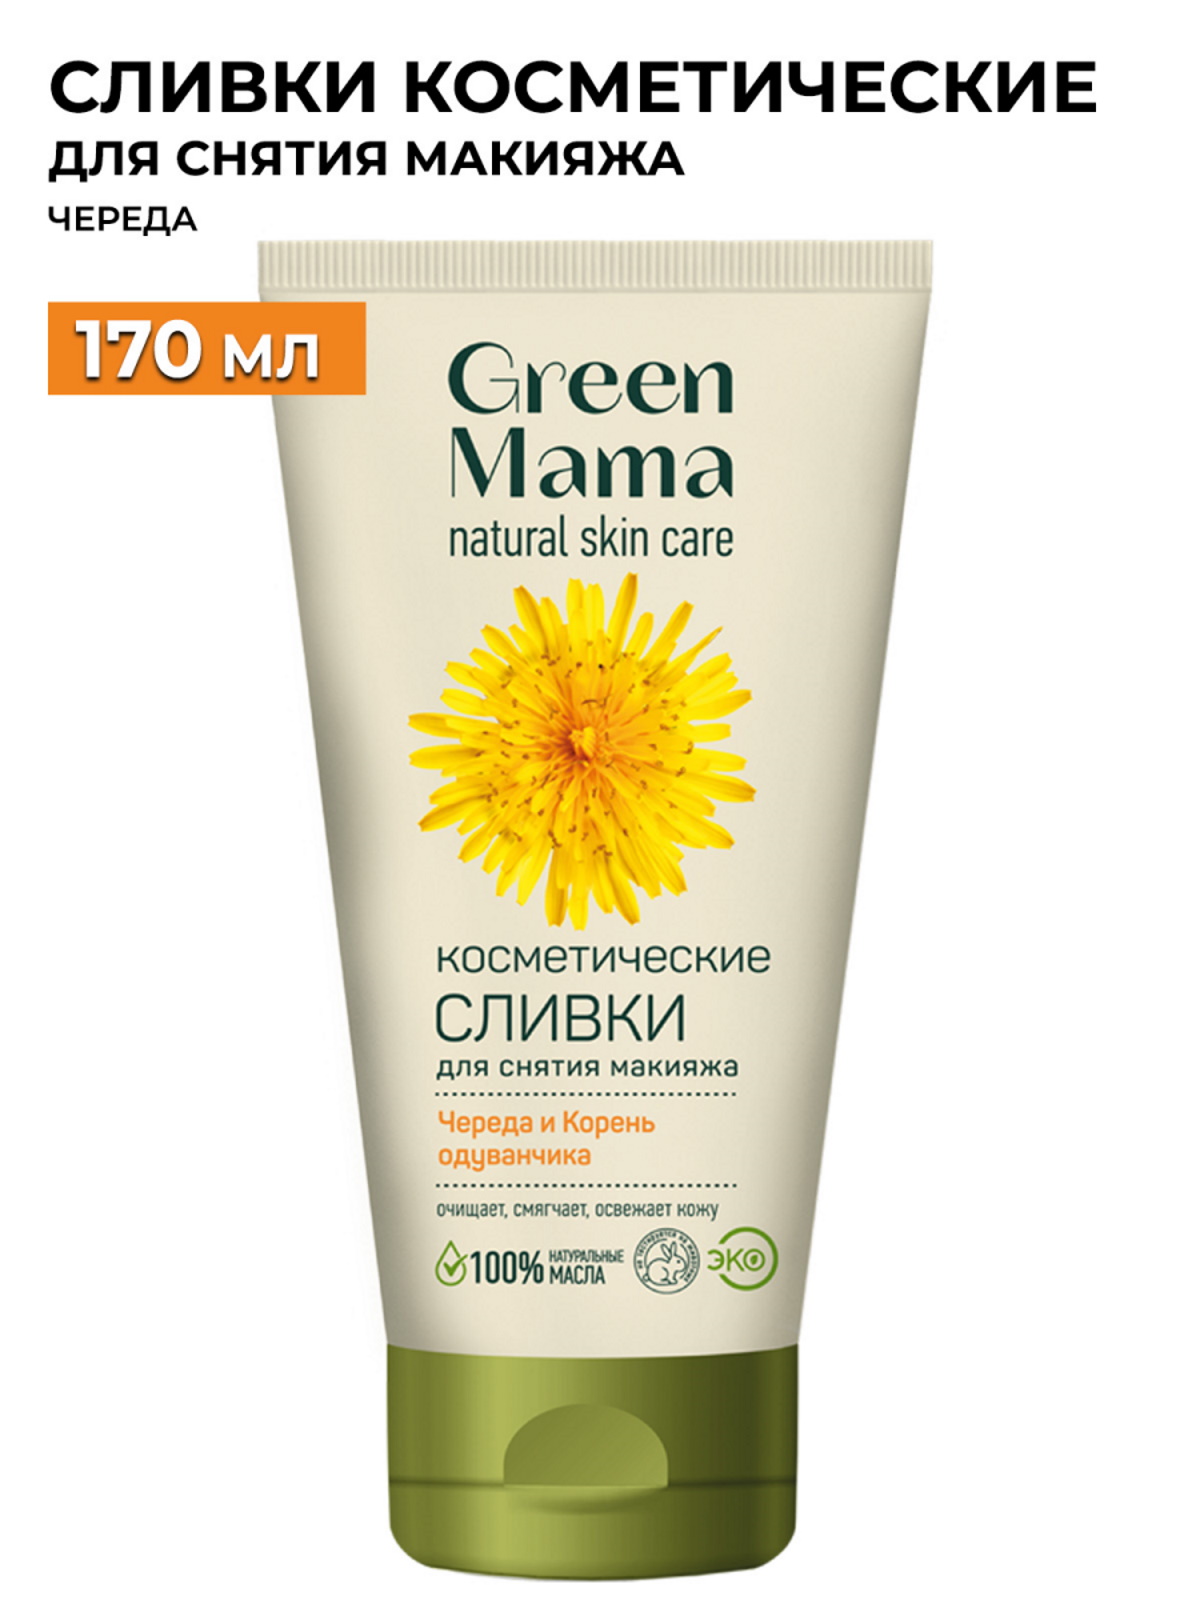 Сливки косметические для снятия макияжа GREEN MAMA, 170 мл bio textiles халат женский green